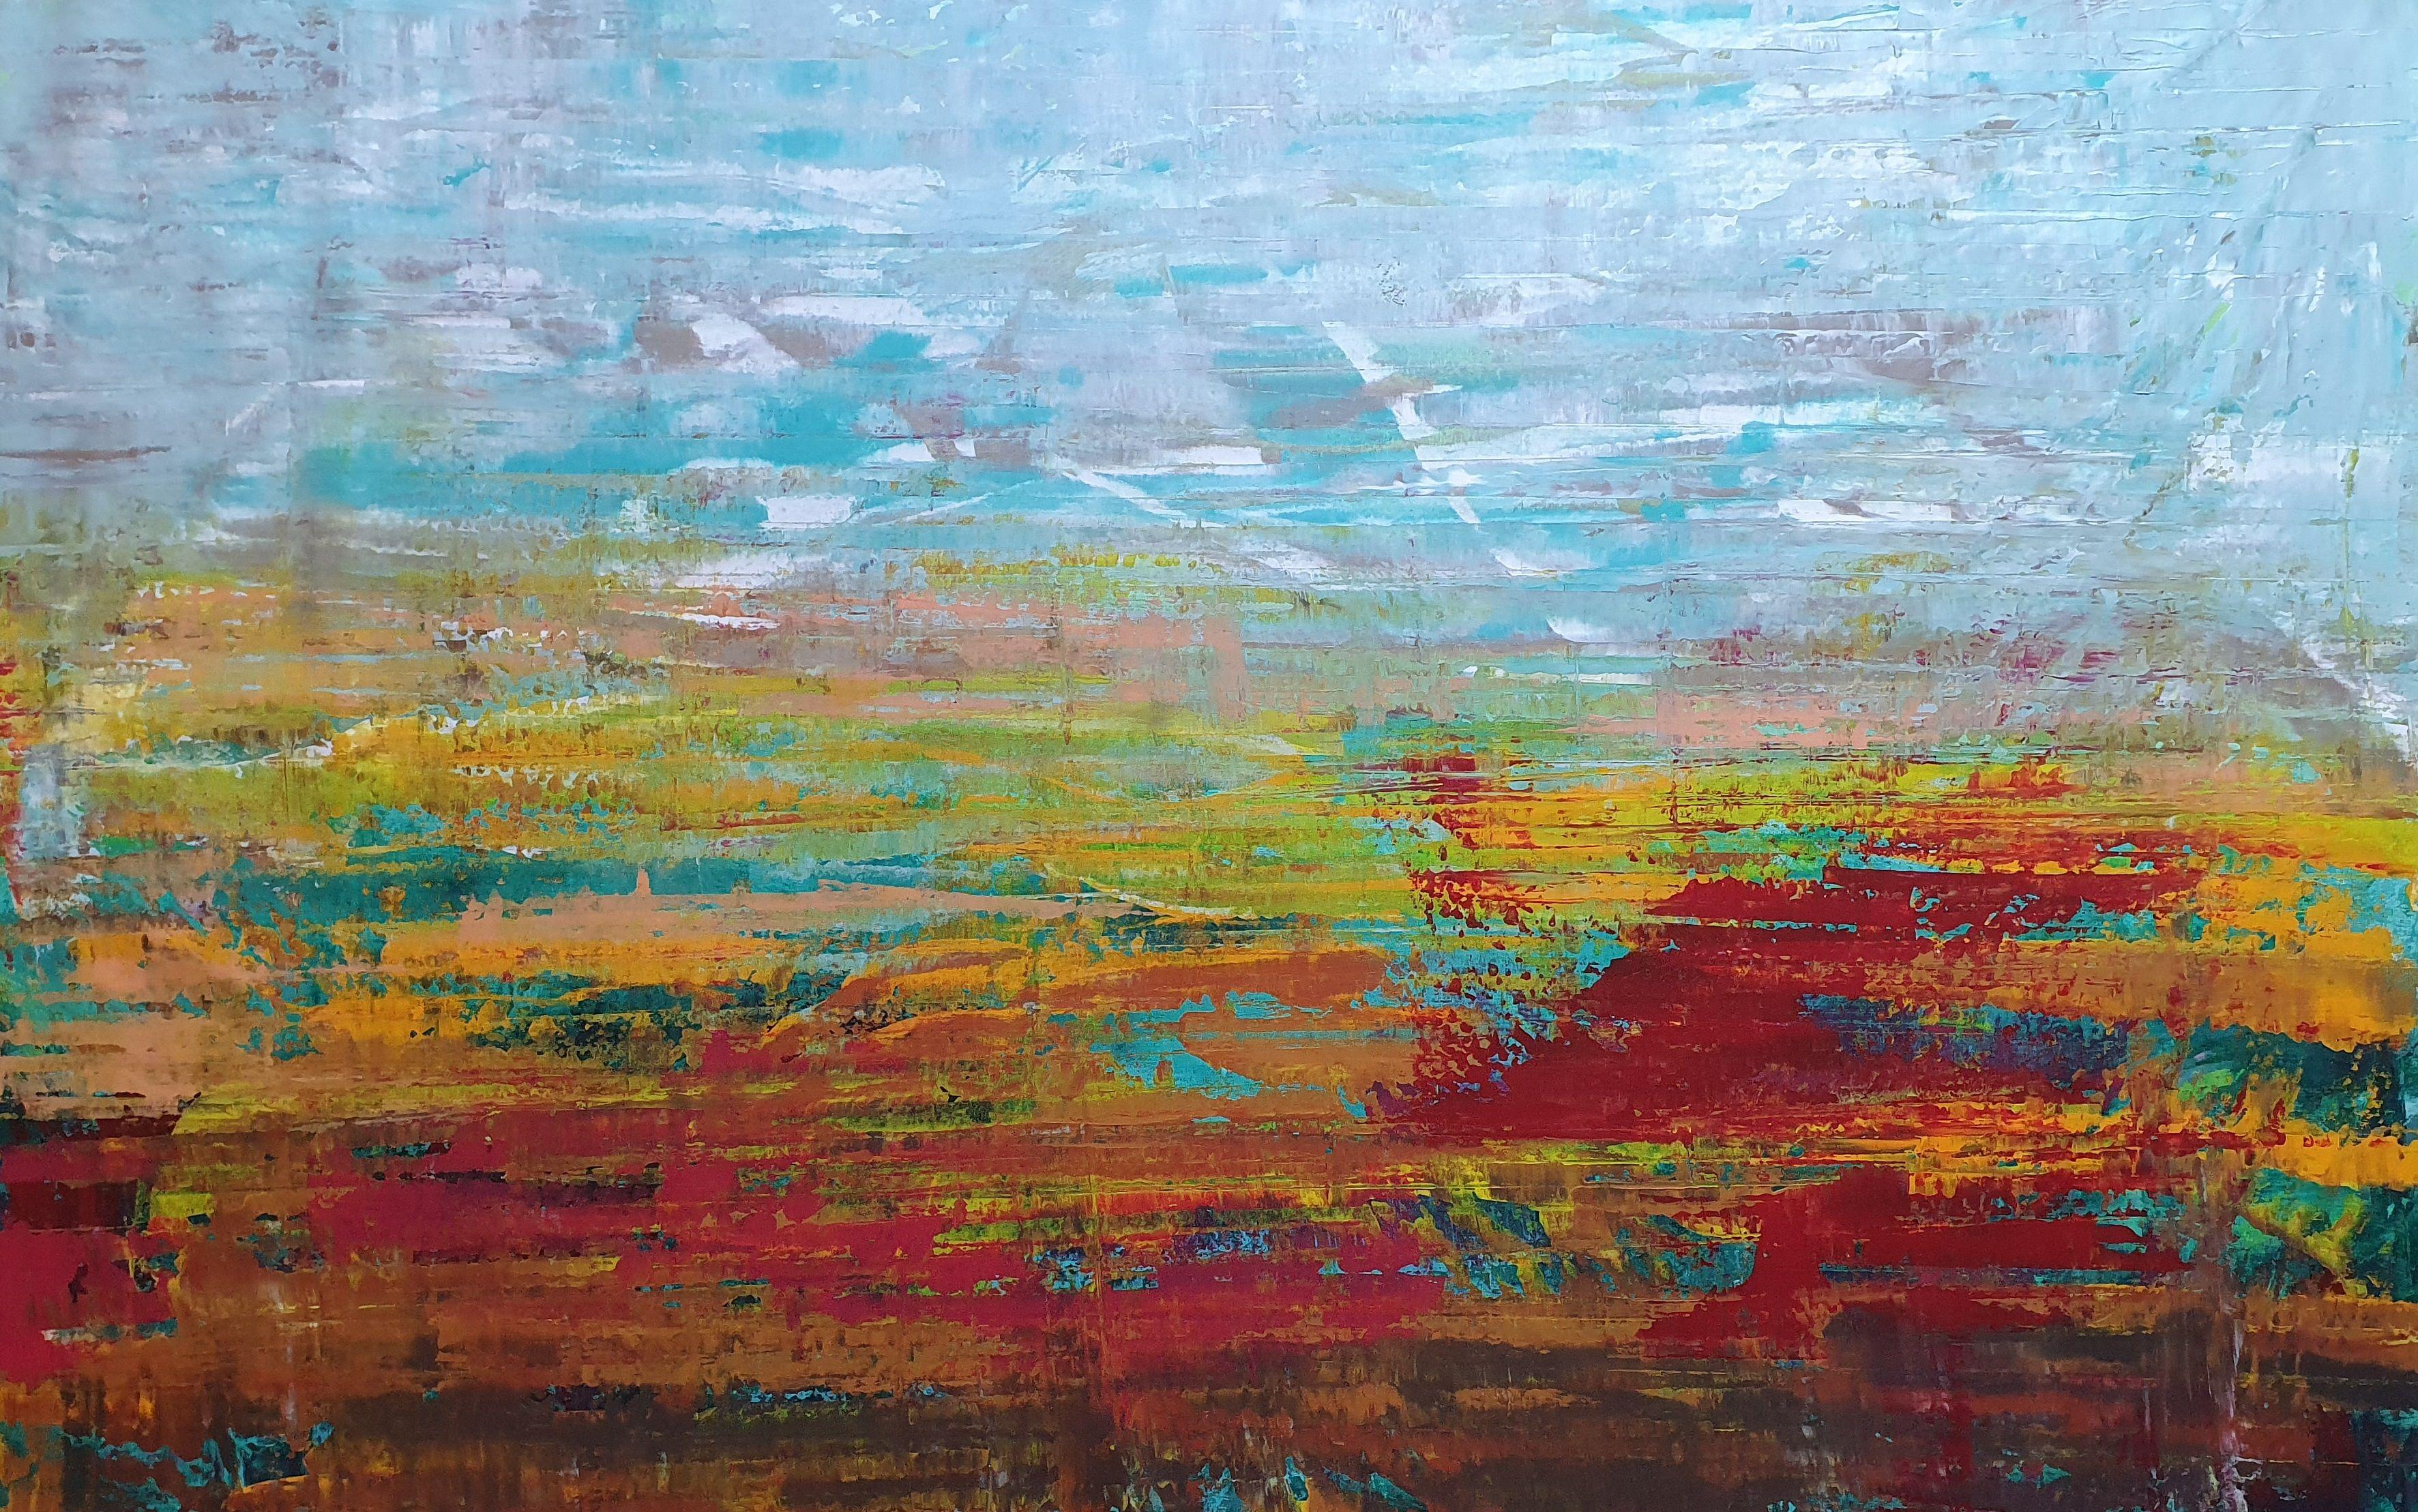 Abstract Painting Ivana Olbricht - August afternoon - XXL paysage abstrait, peinture, acrylique sur toile